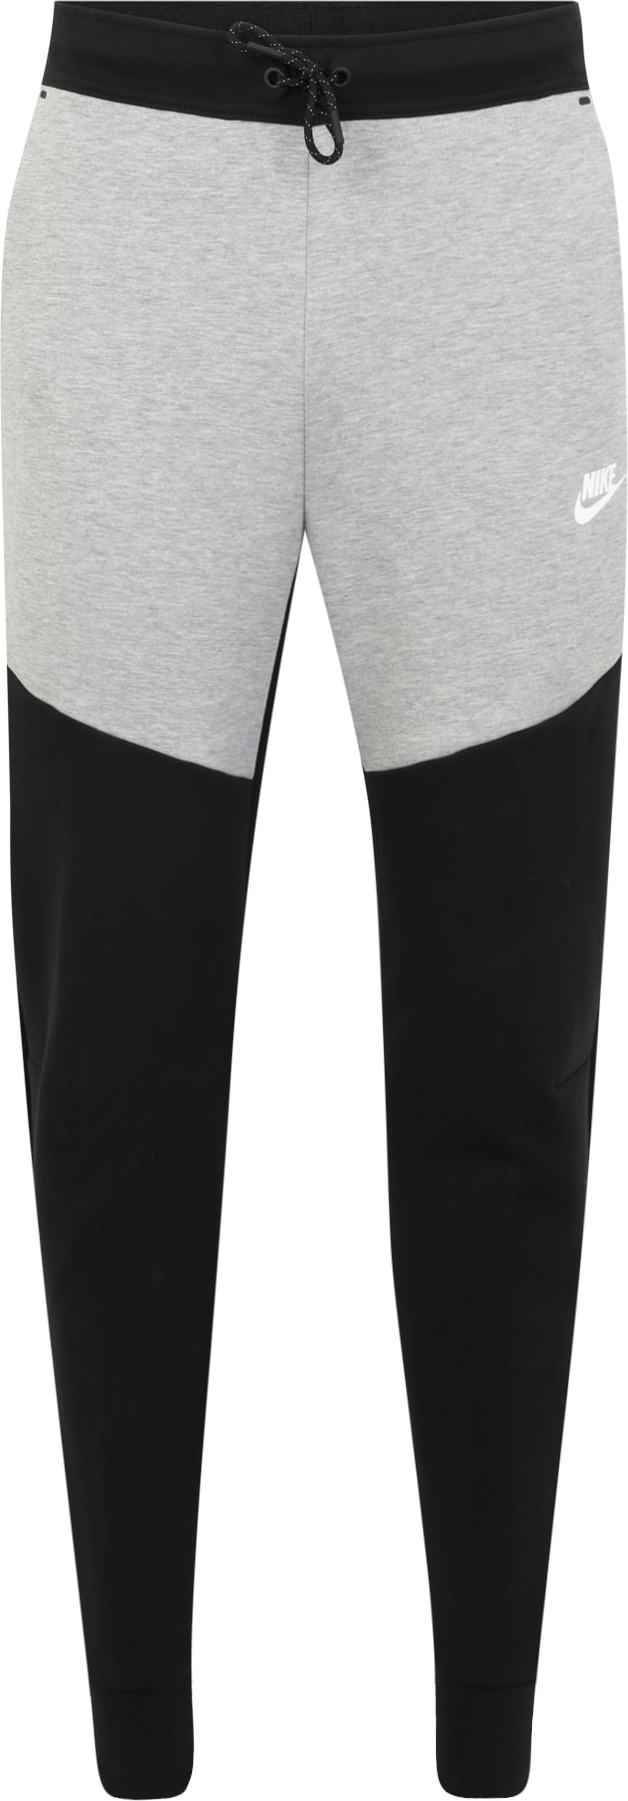 Nike Sportswear Kalhoty šedý melír / černá / bílá